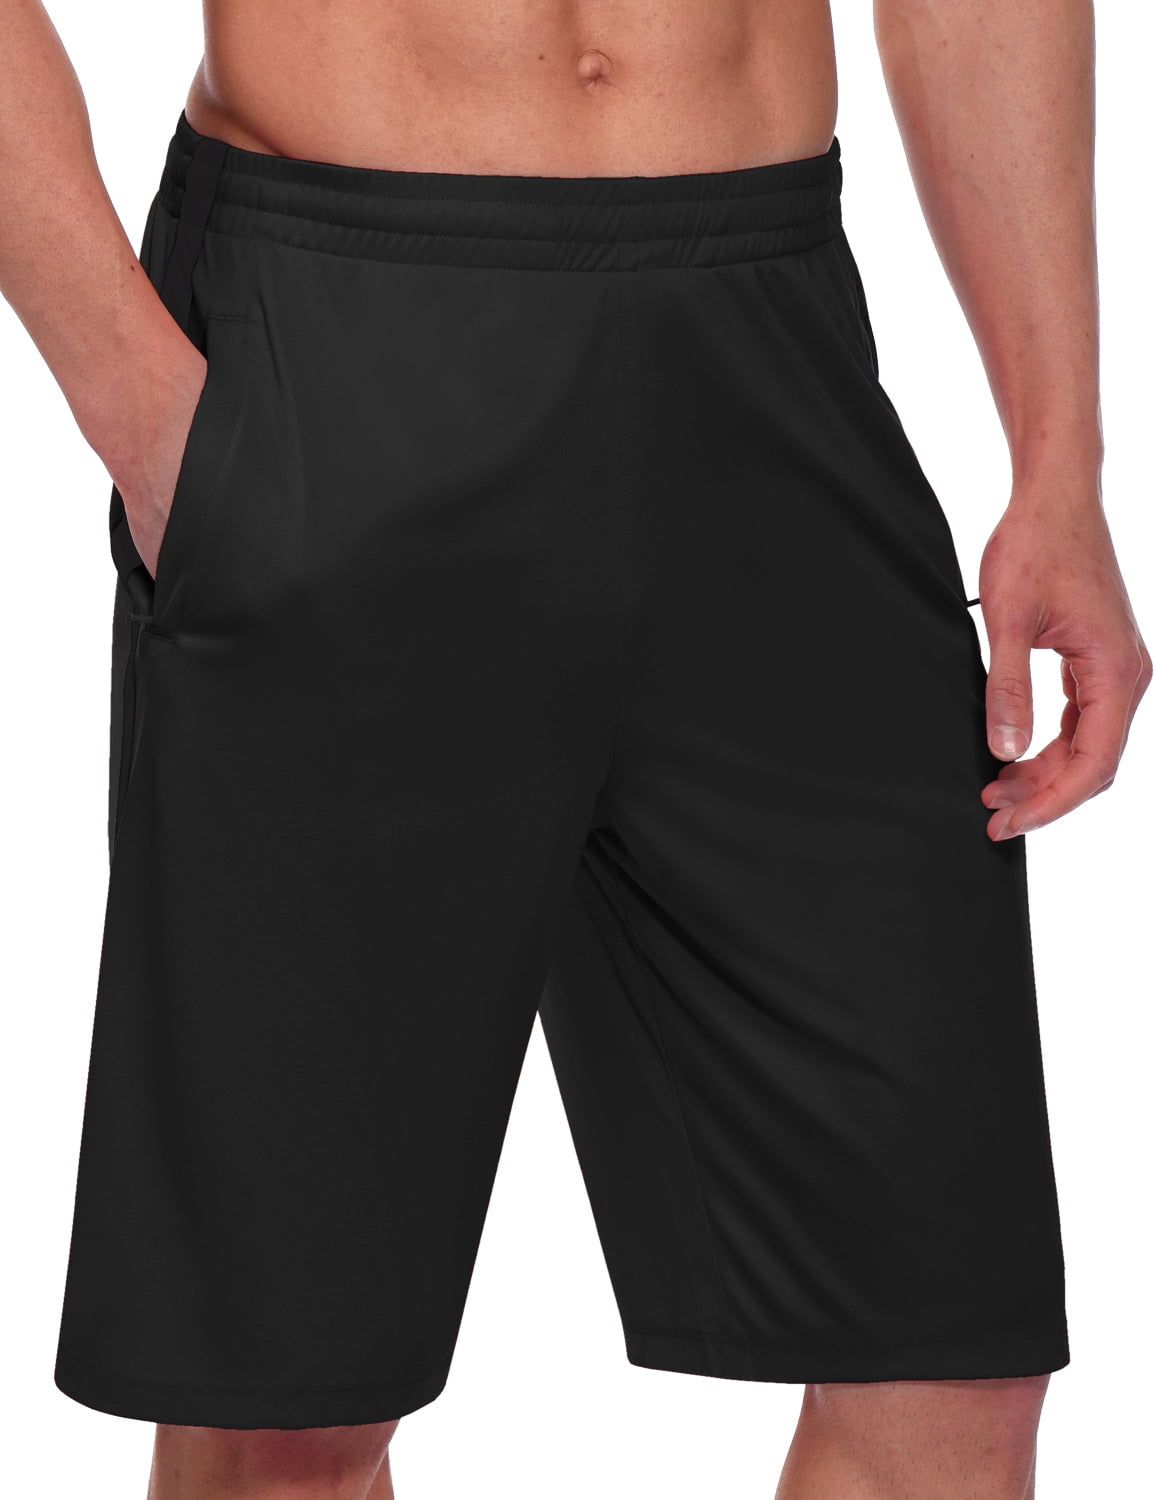 BALEAF Men's 11'' Basketball Shorts Long with Zipper Pockets Gym Shorts Lightweight Workout Training Drawstrings Gray Size M - Walmart.com